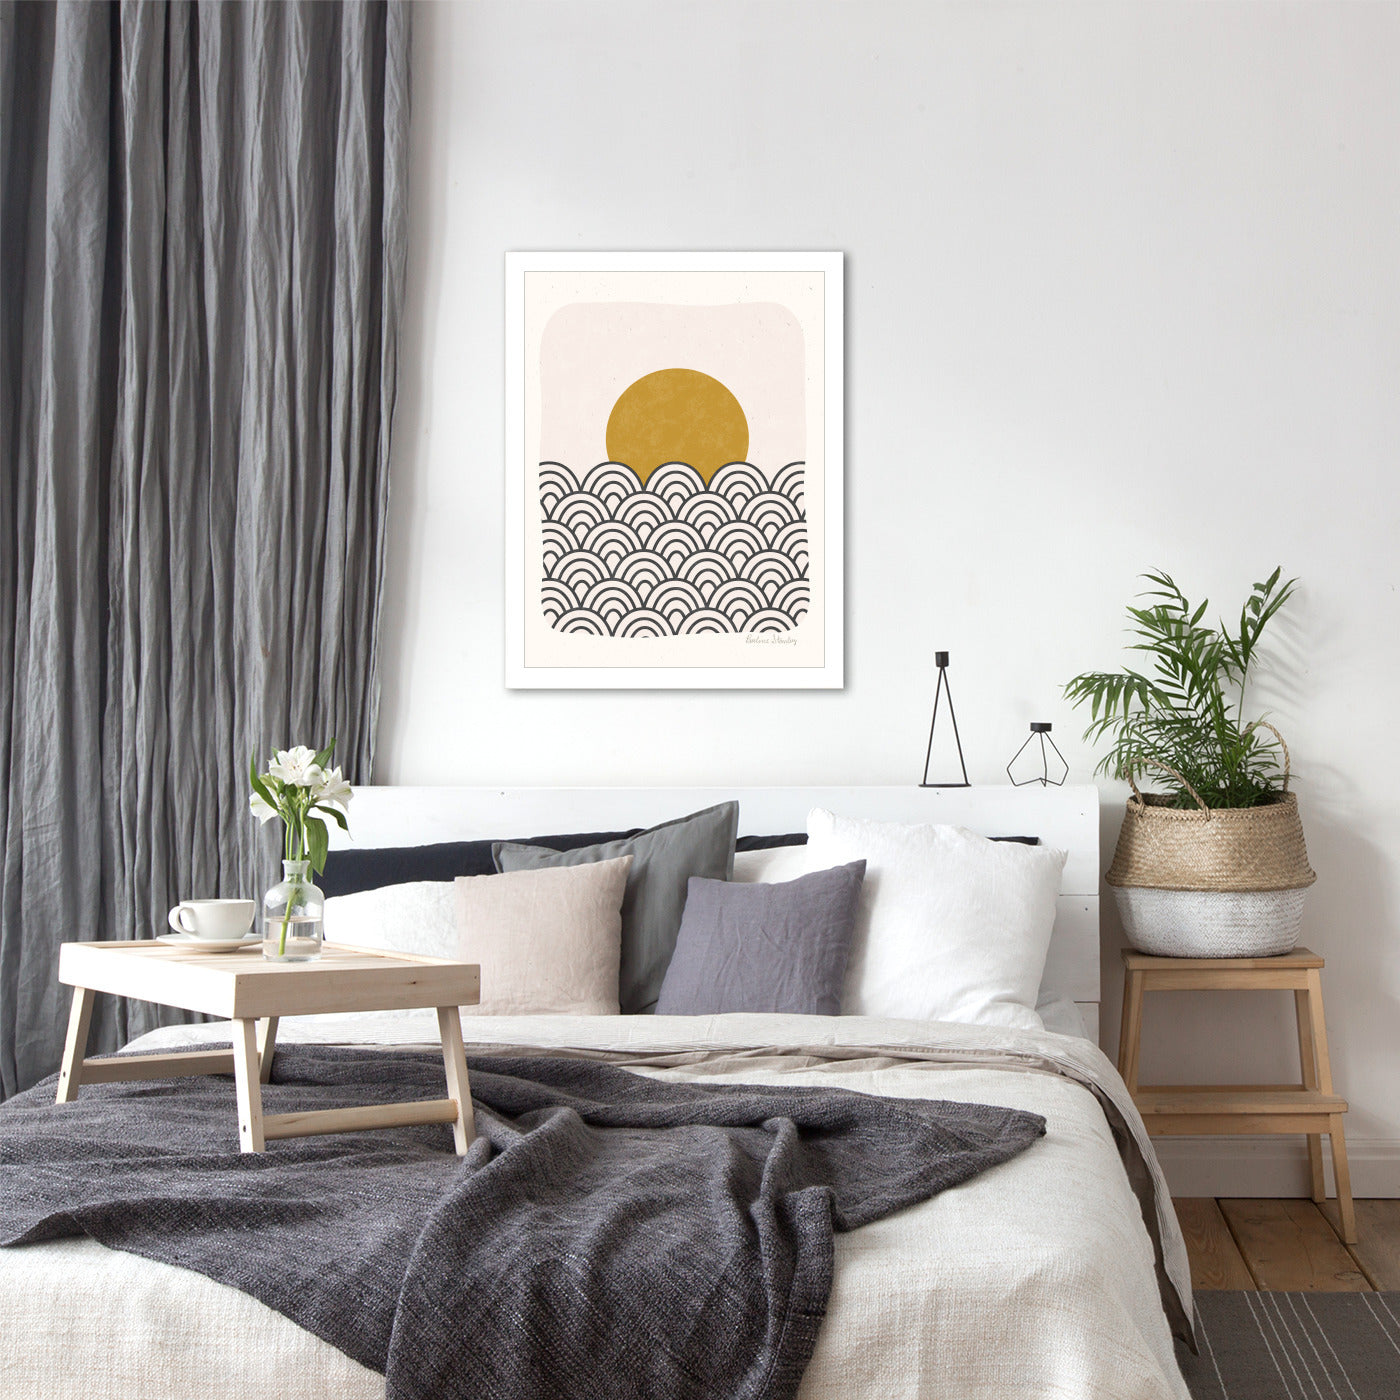 Sun Waves Ochre Black by Pauline Stanley - Framed Print - Americanflat